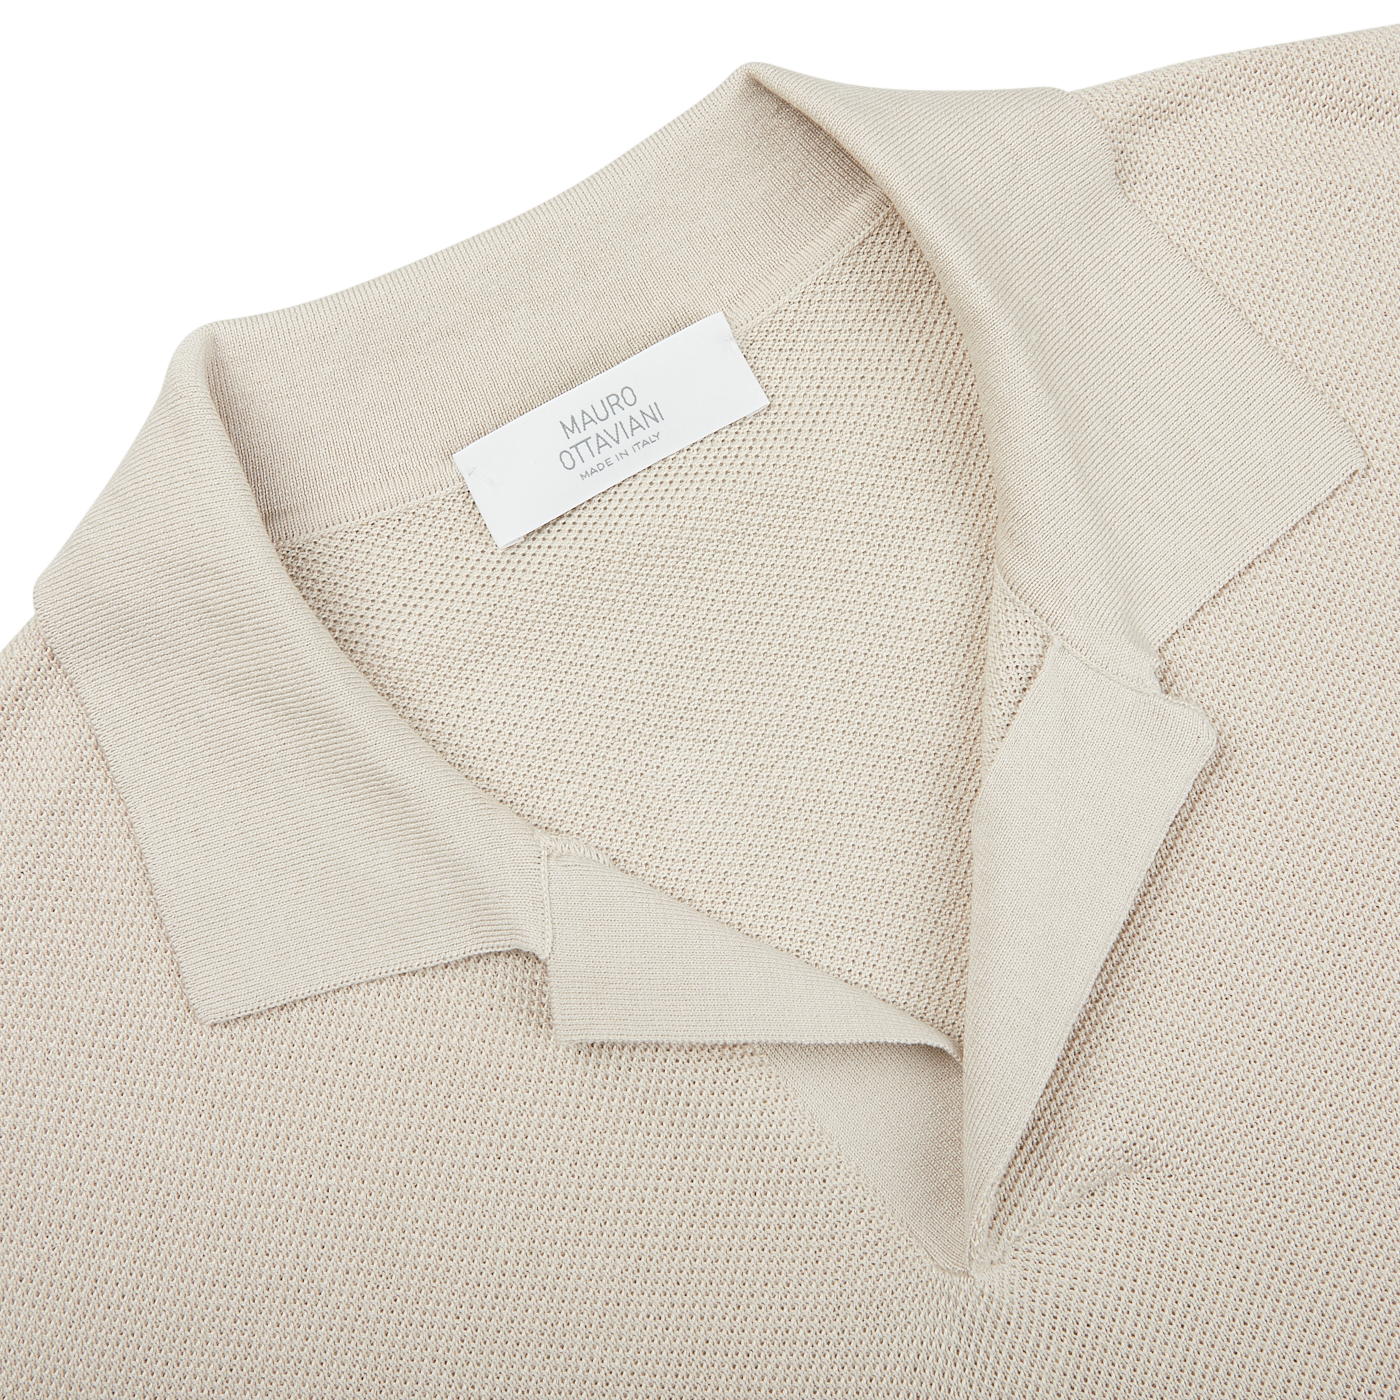 A close up of a Cream Beige Cotton Silk Mauro Ottaviani polo shirt.